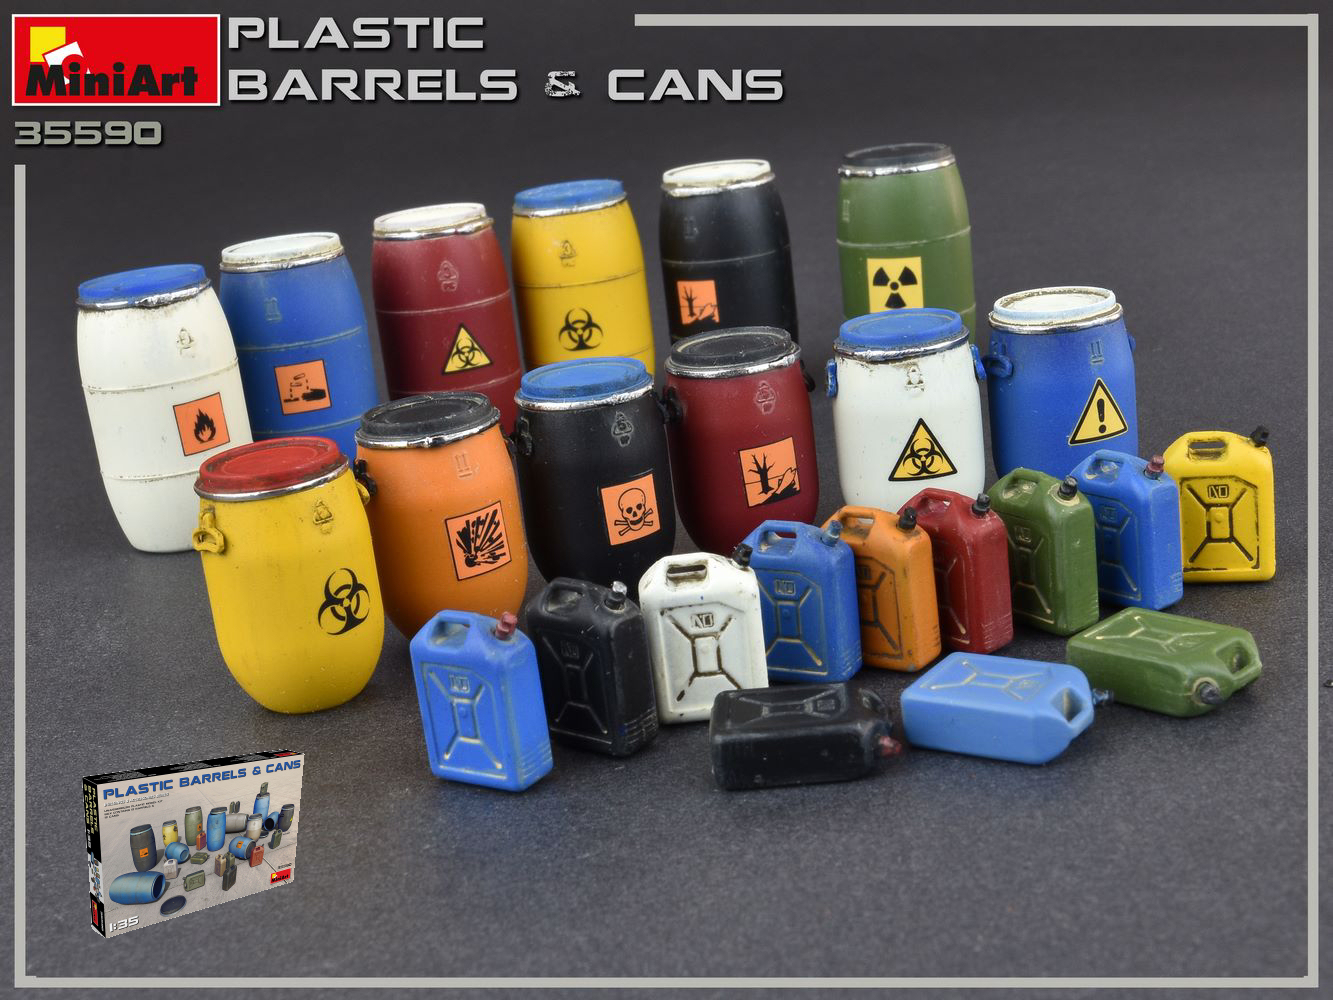 Modellino diorami kit di montaggio Miniart  PLASTIC BARRELS & CANS KIT 1:35 m...